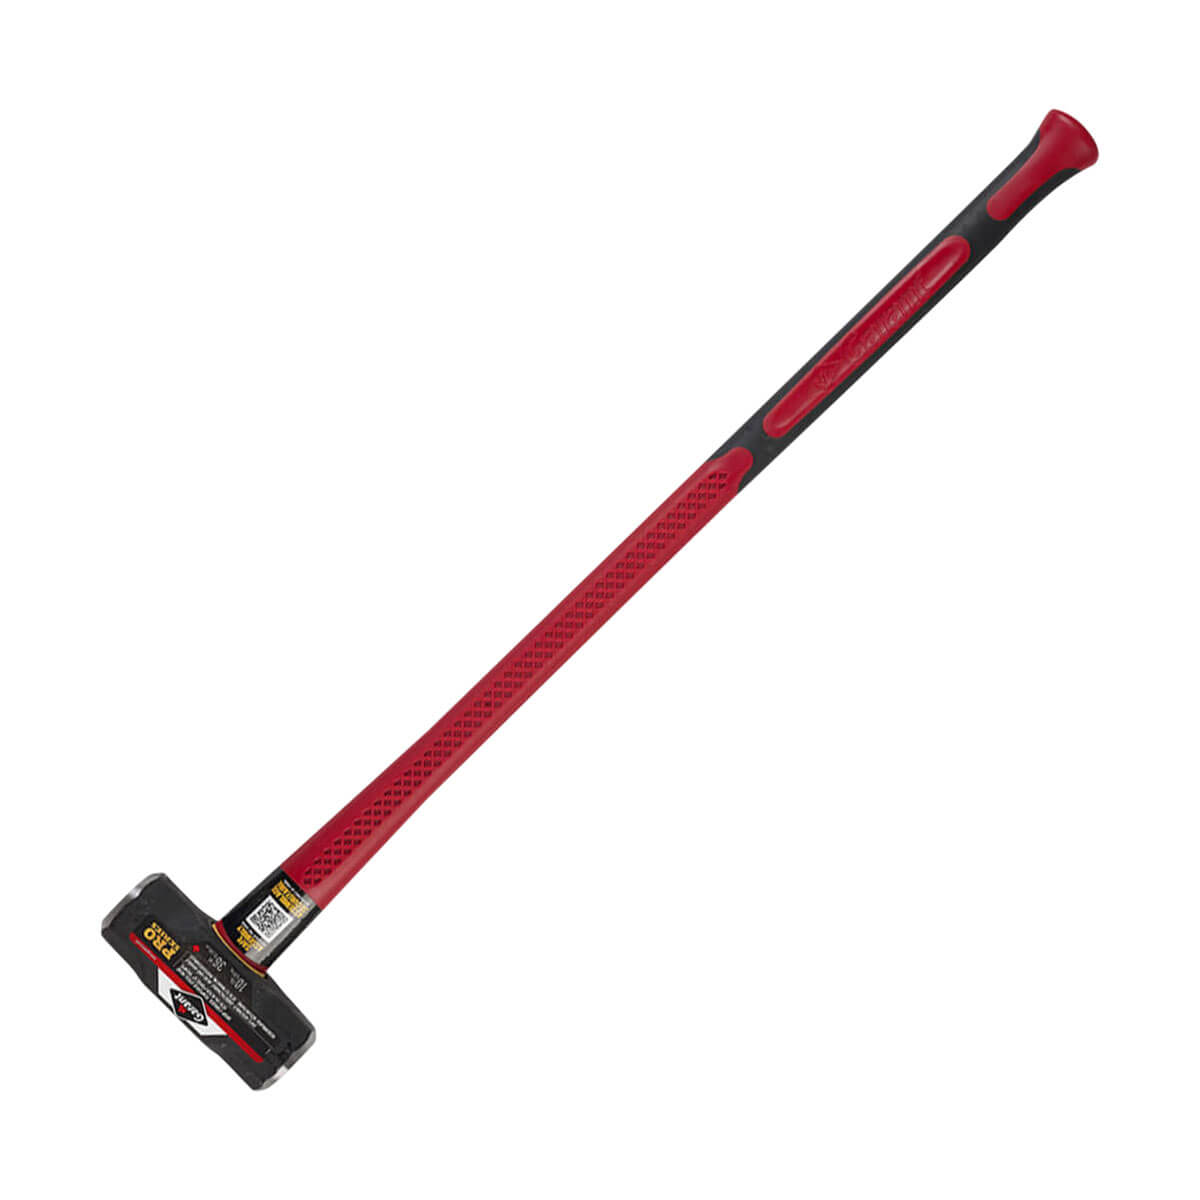 Sledge Hammer - 24-in - 4 lb